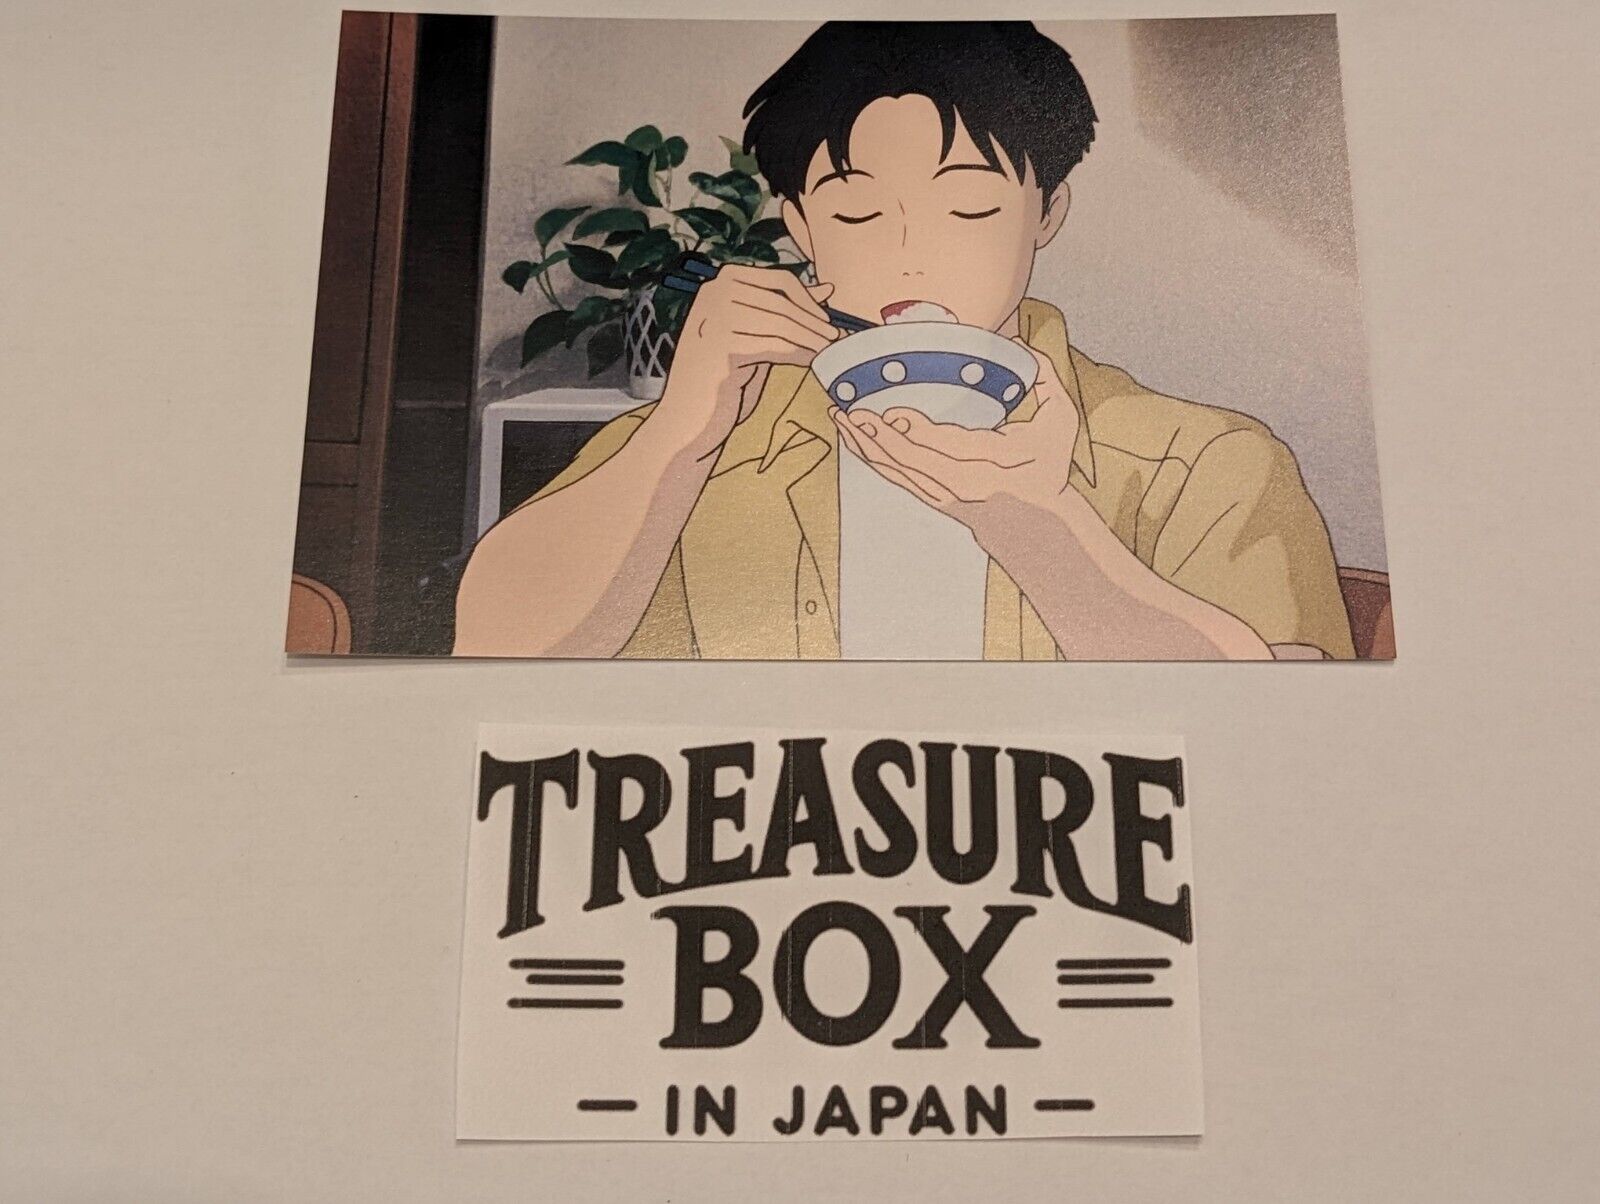 Studio Ghibli Mitaka Forest Museum LTD Postcard  Ocean Waves Umi ga kikoeru